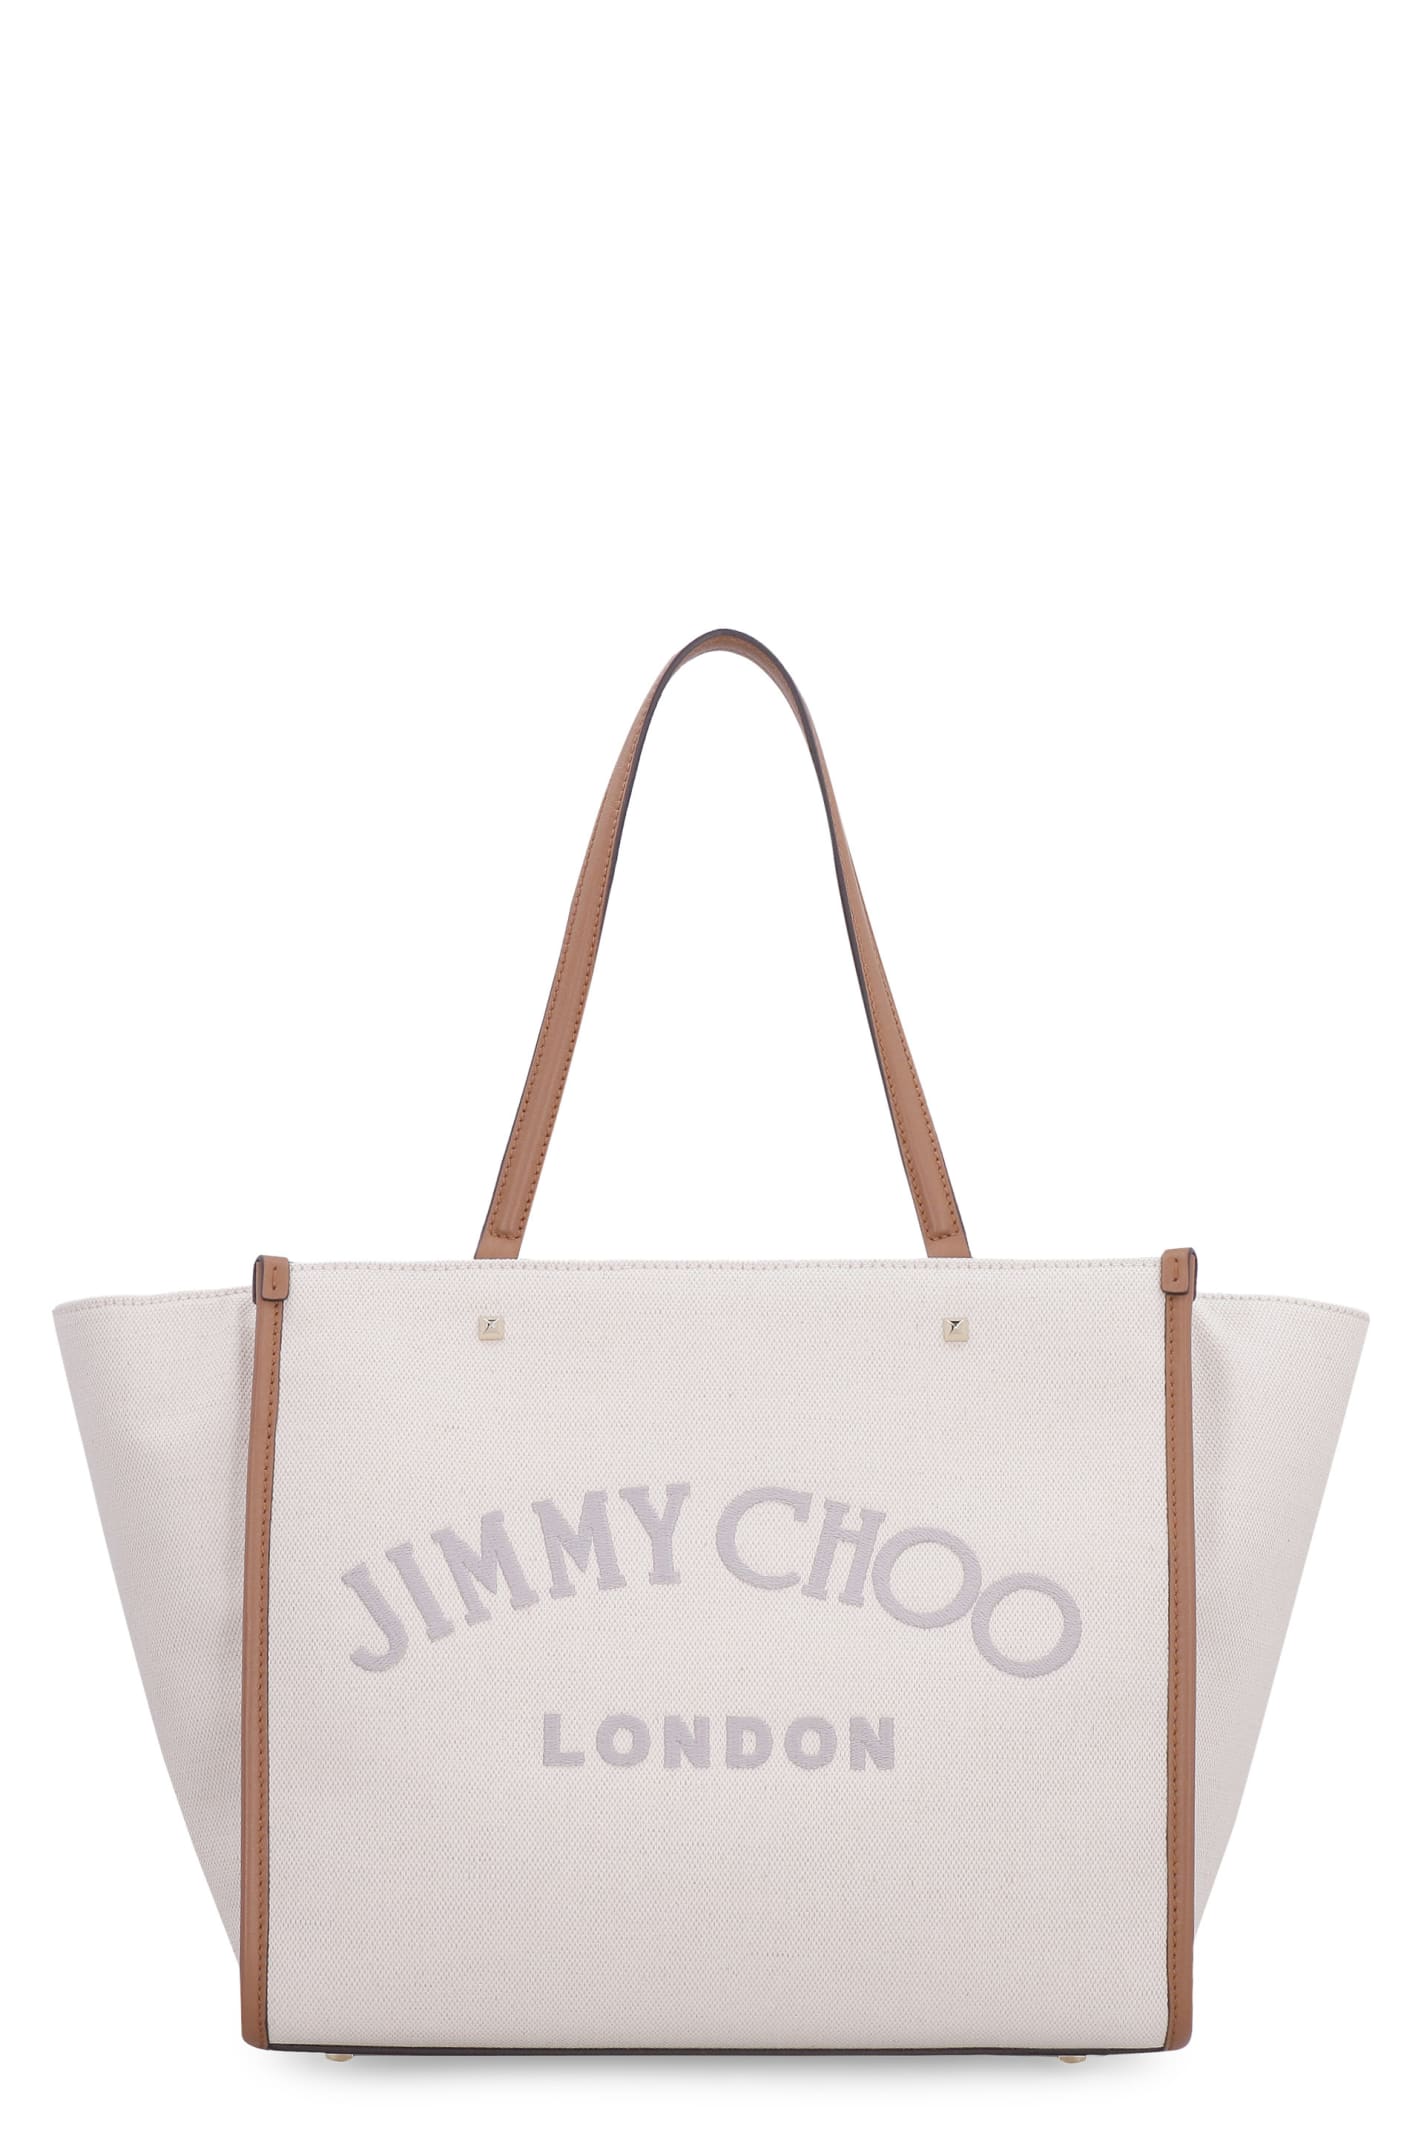 Jimmy Choo Varenne Canvas Tote Bag